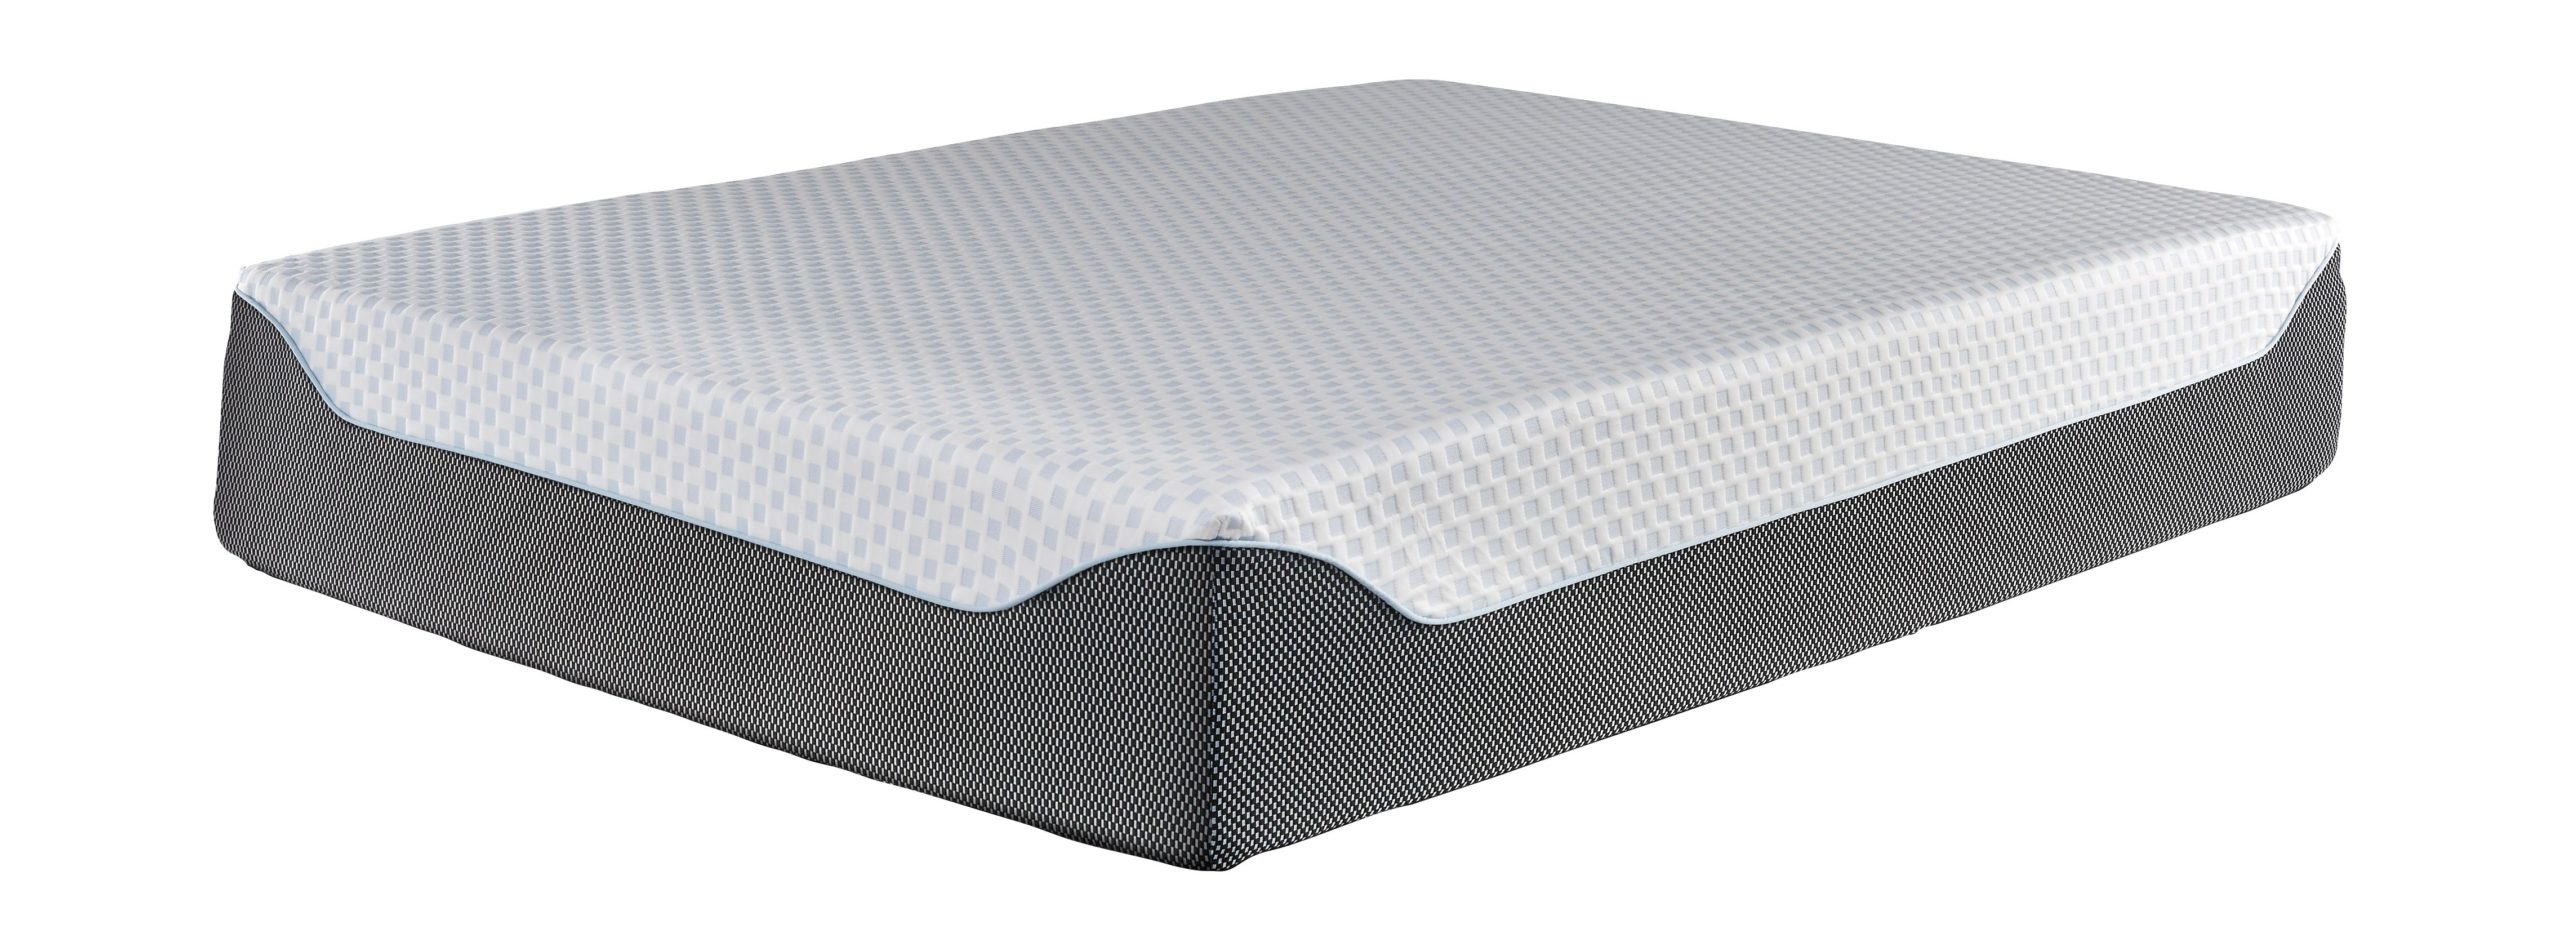 14 inch chime elite king mattress